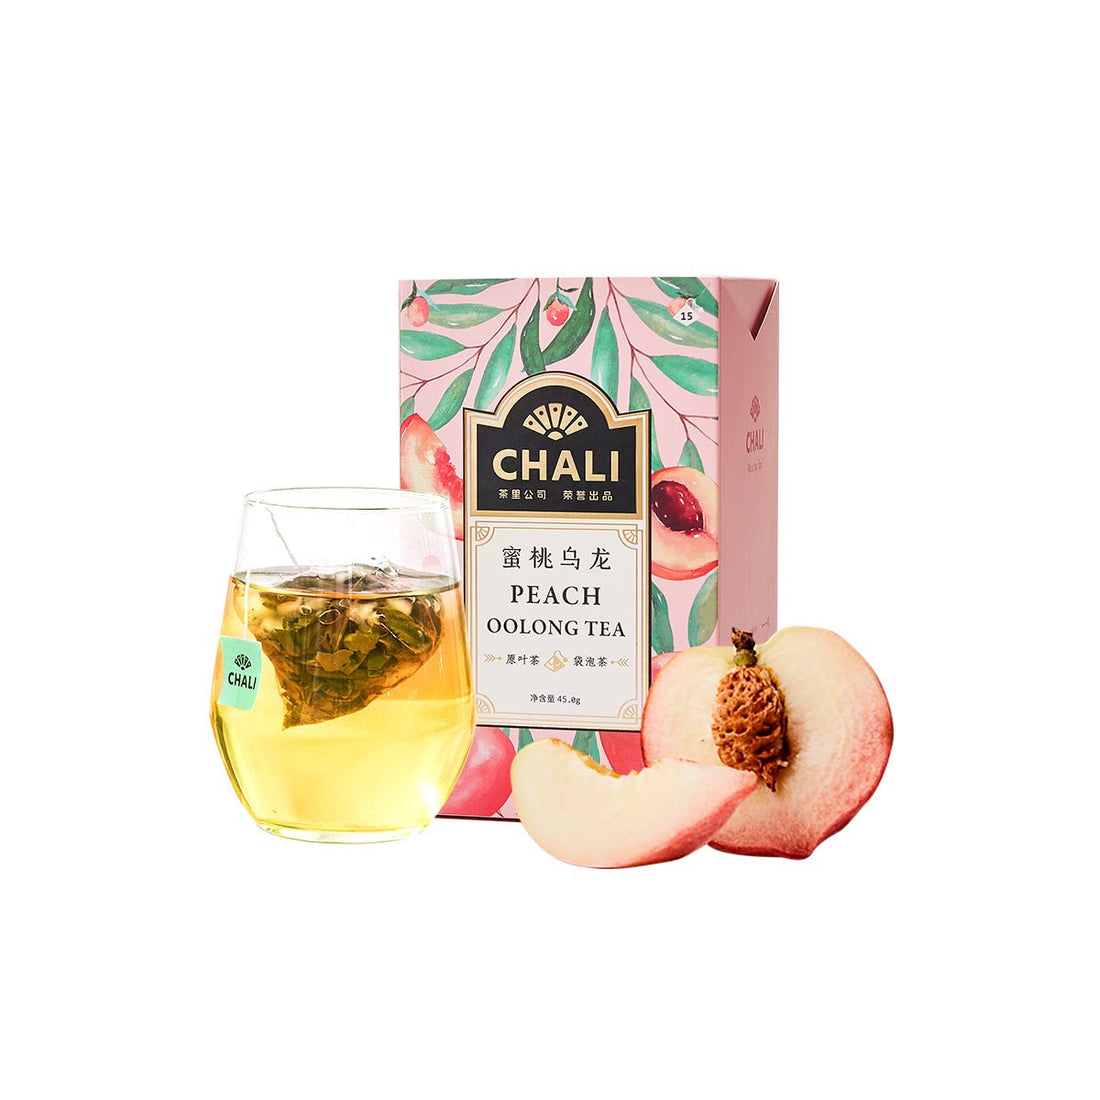 Peach Oolong Tea 45g (15 Tea Bags) - 0cm